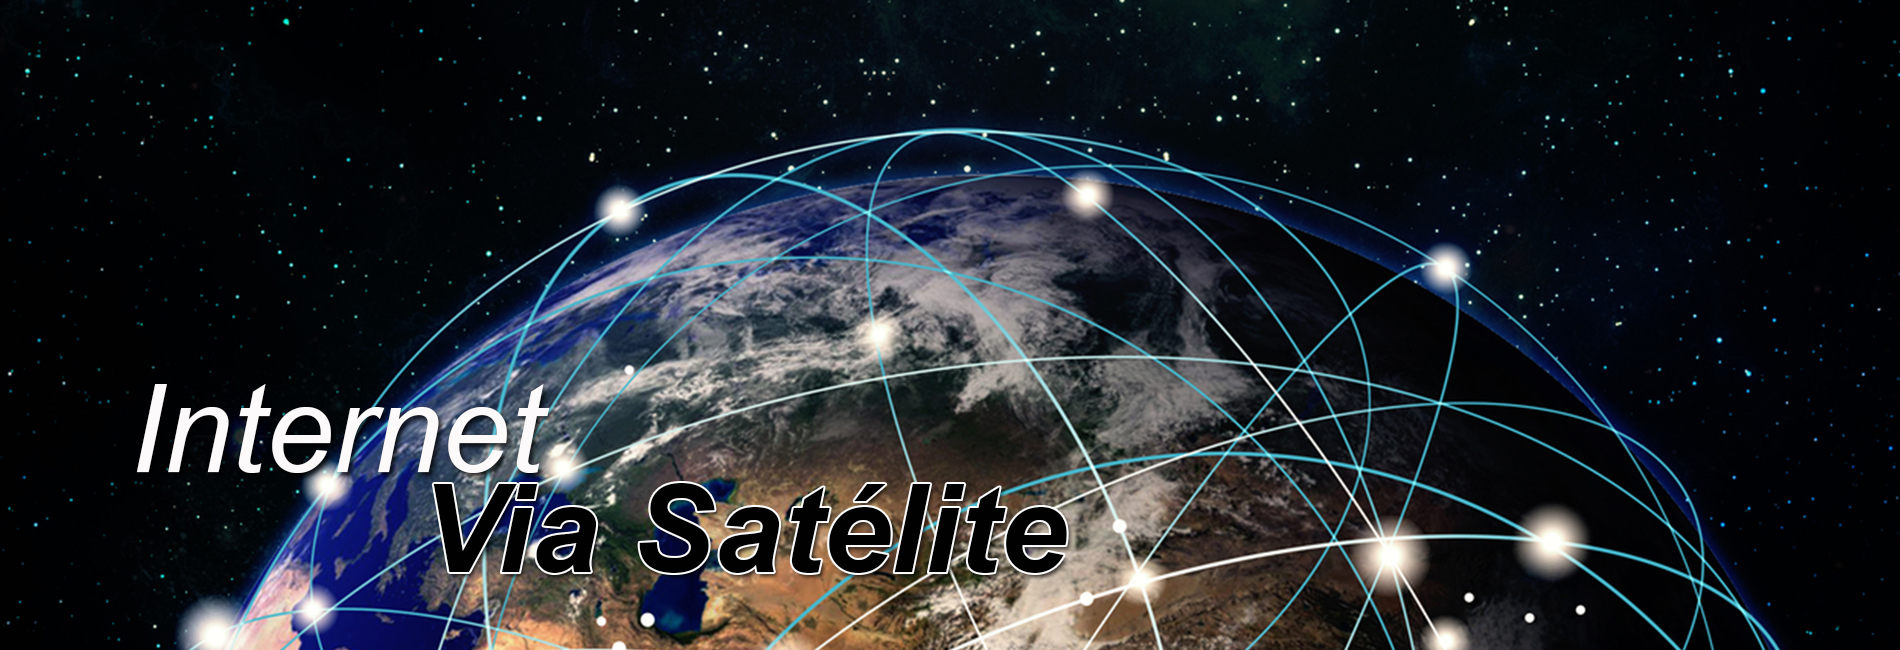 SECLink Via Satelite